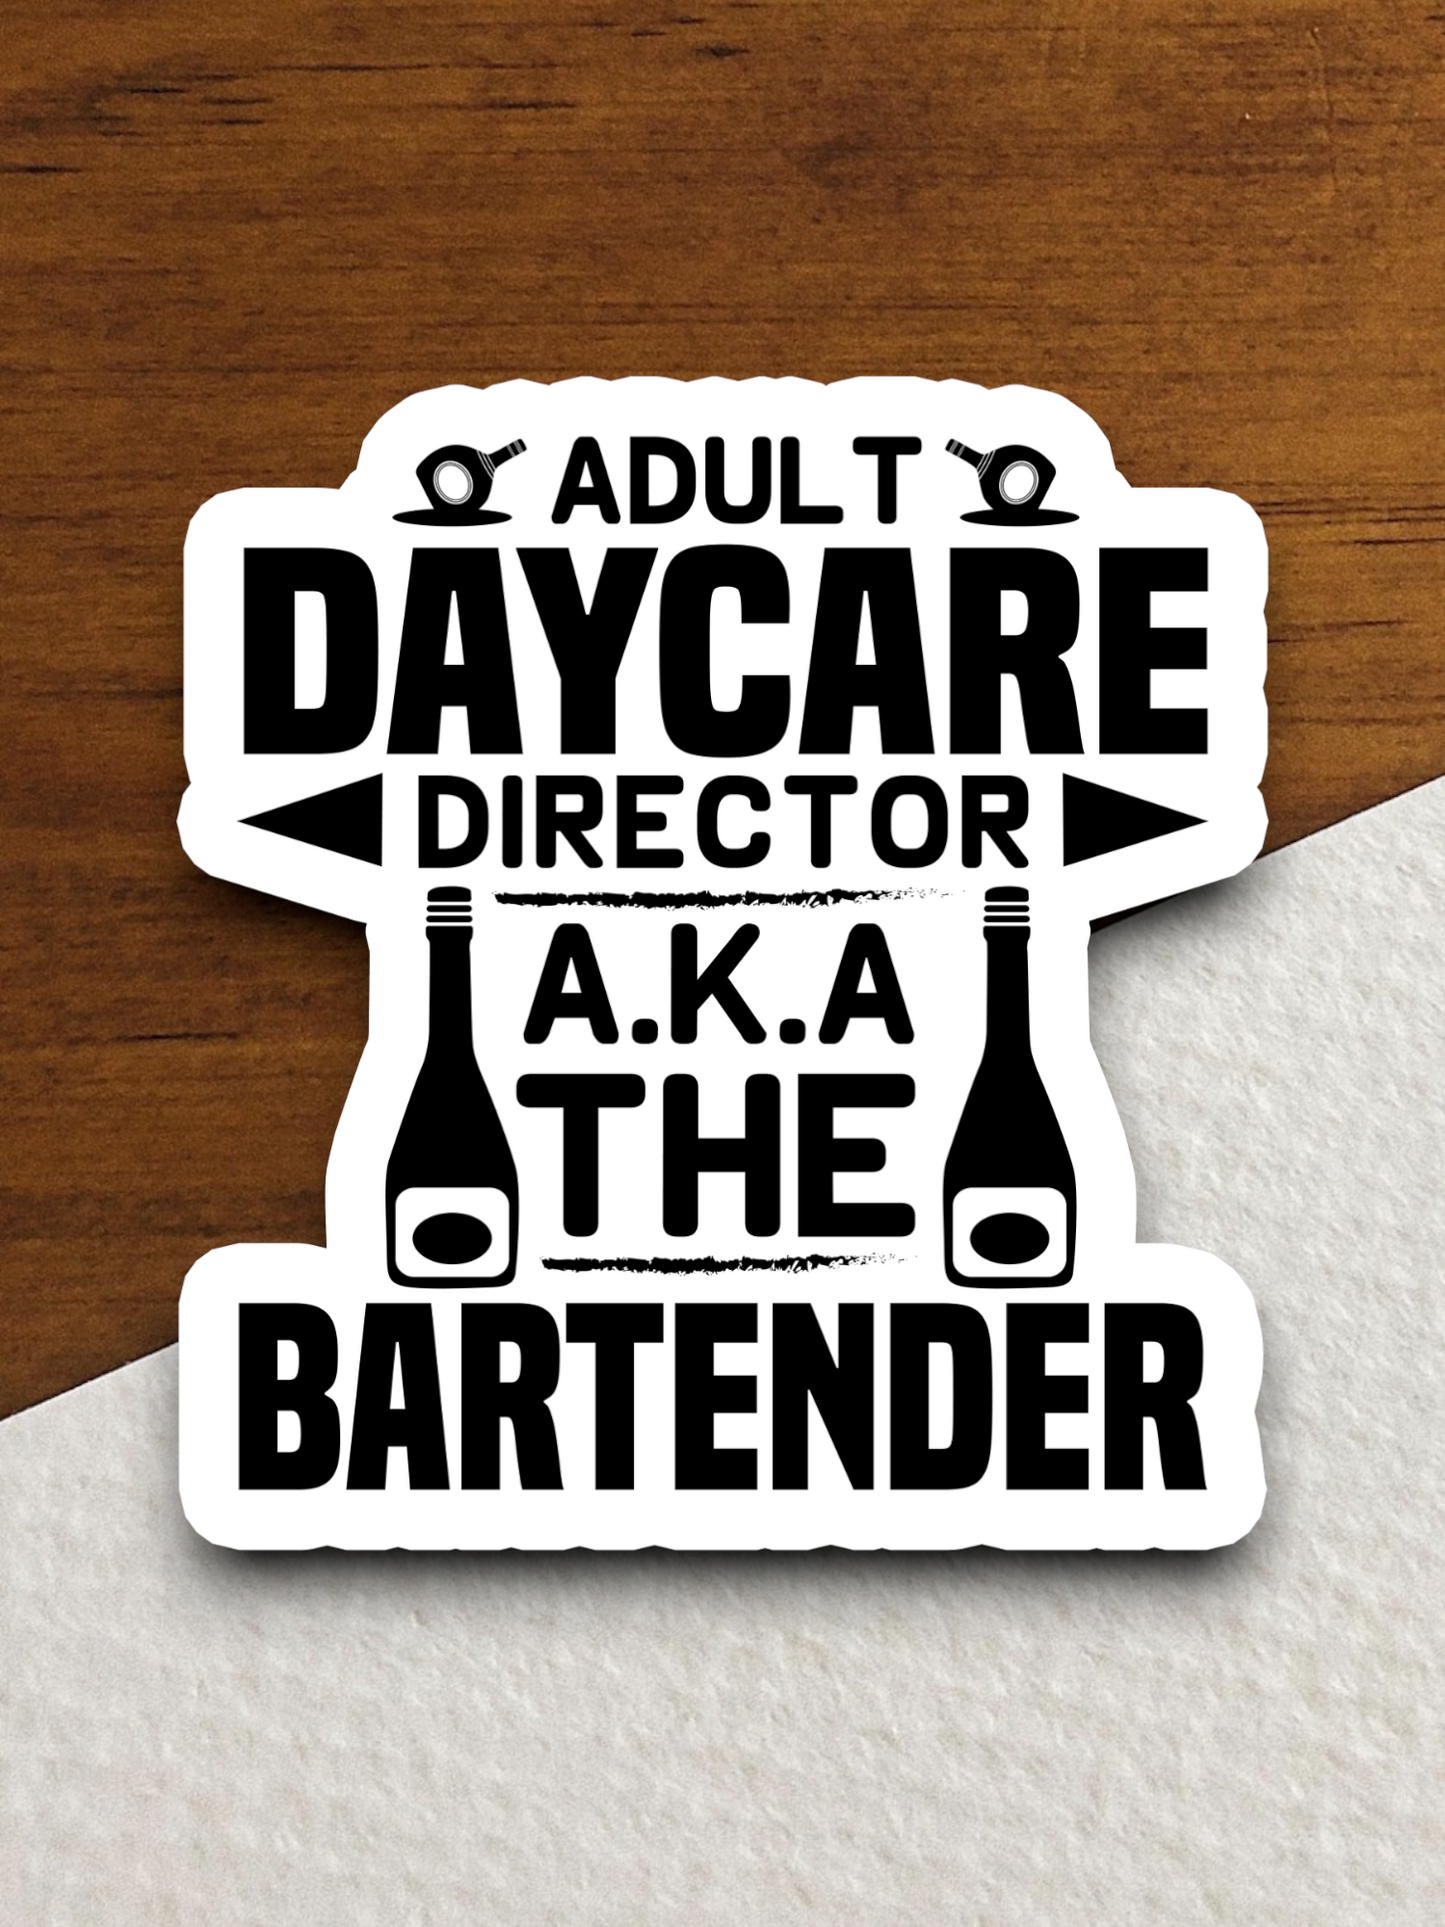 Adult Daycare Director AKA The Bartender Sticker